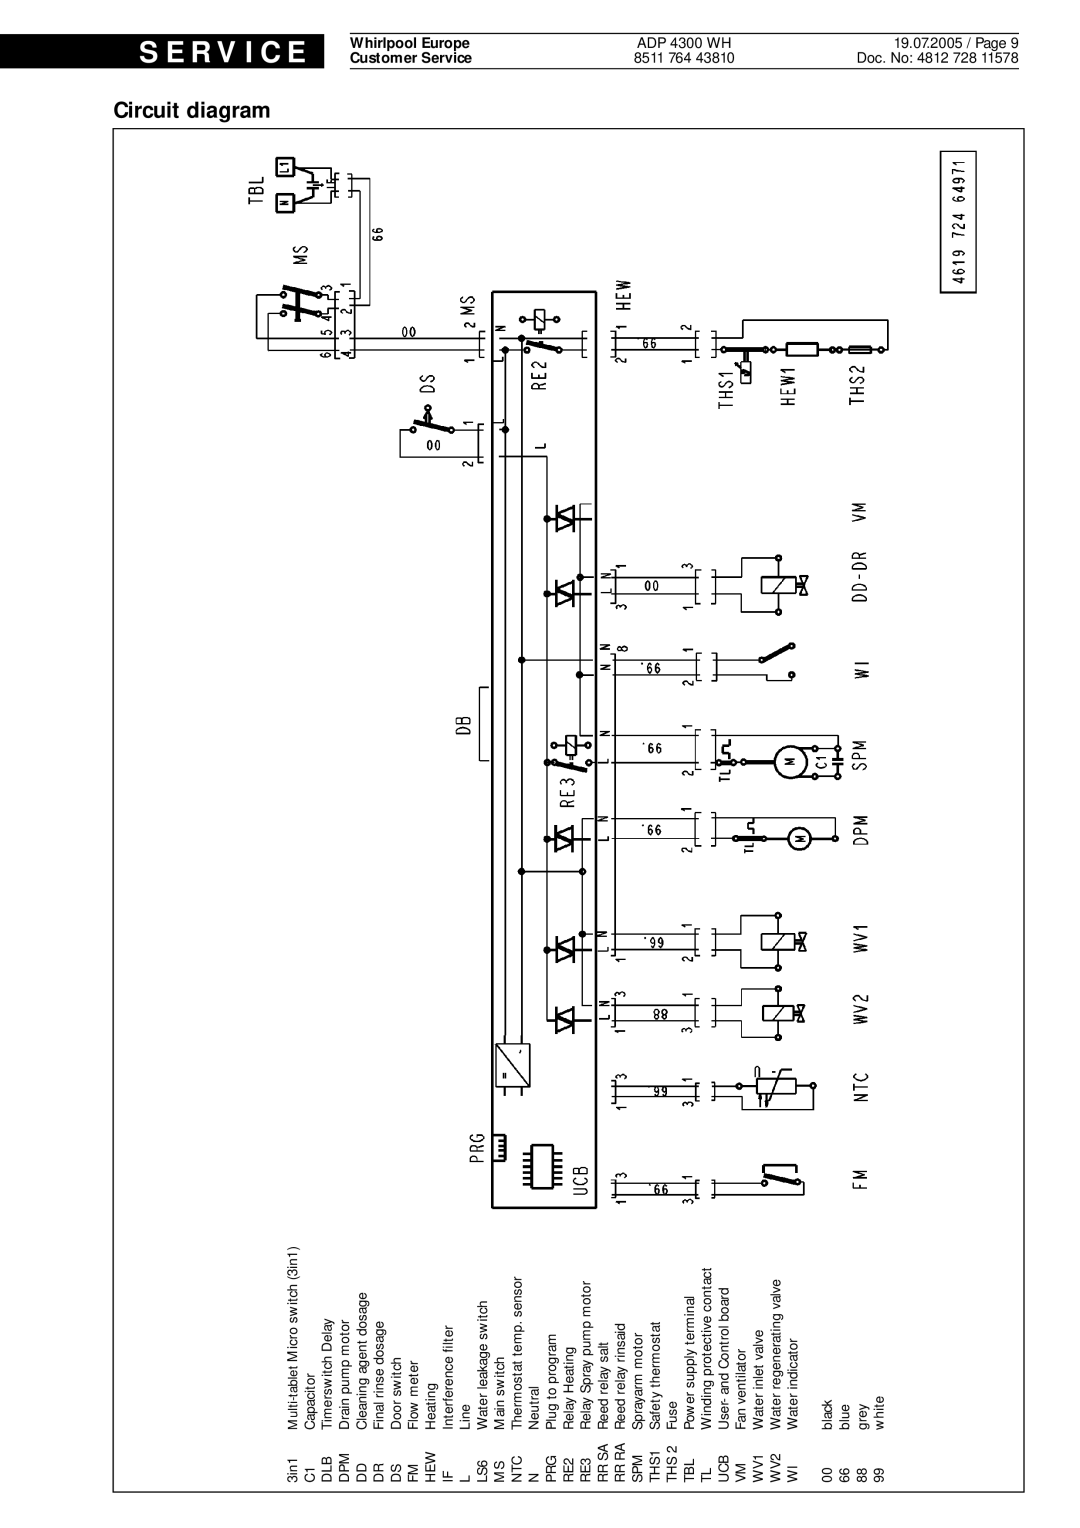 Whirlpool ADP 4300 WH service manual Circuit, diagram, R V I C, Whirlpool Europe Customer Service 